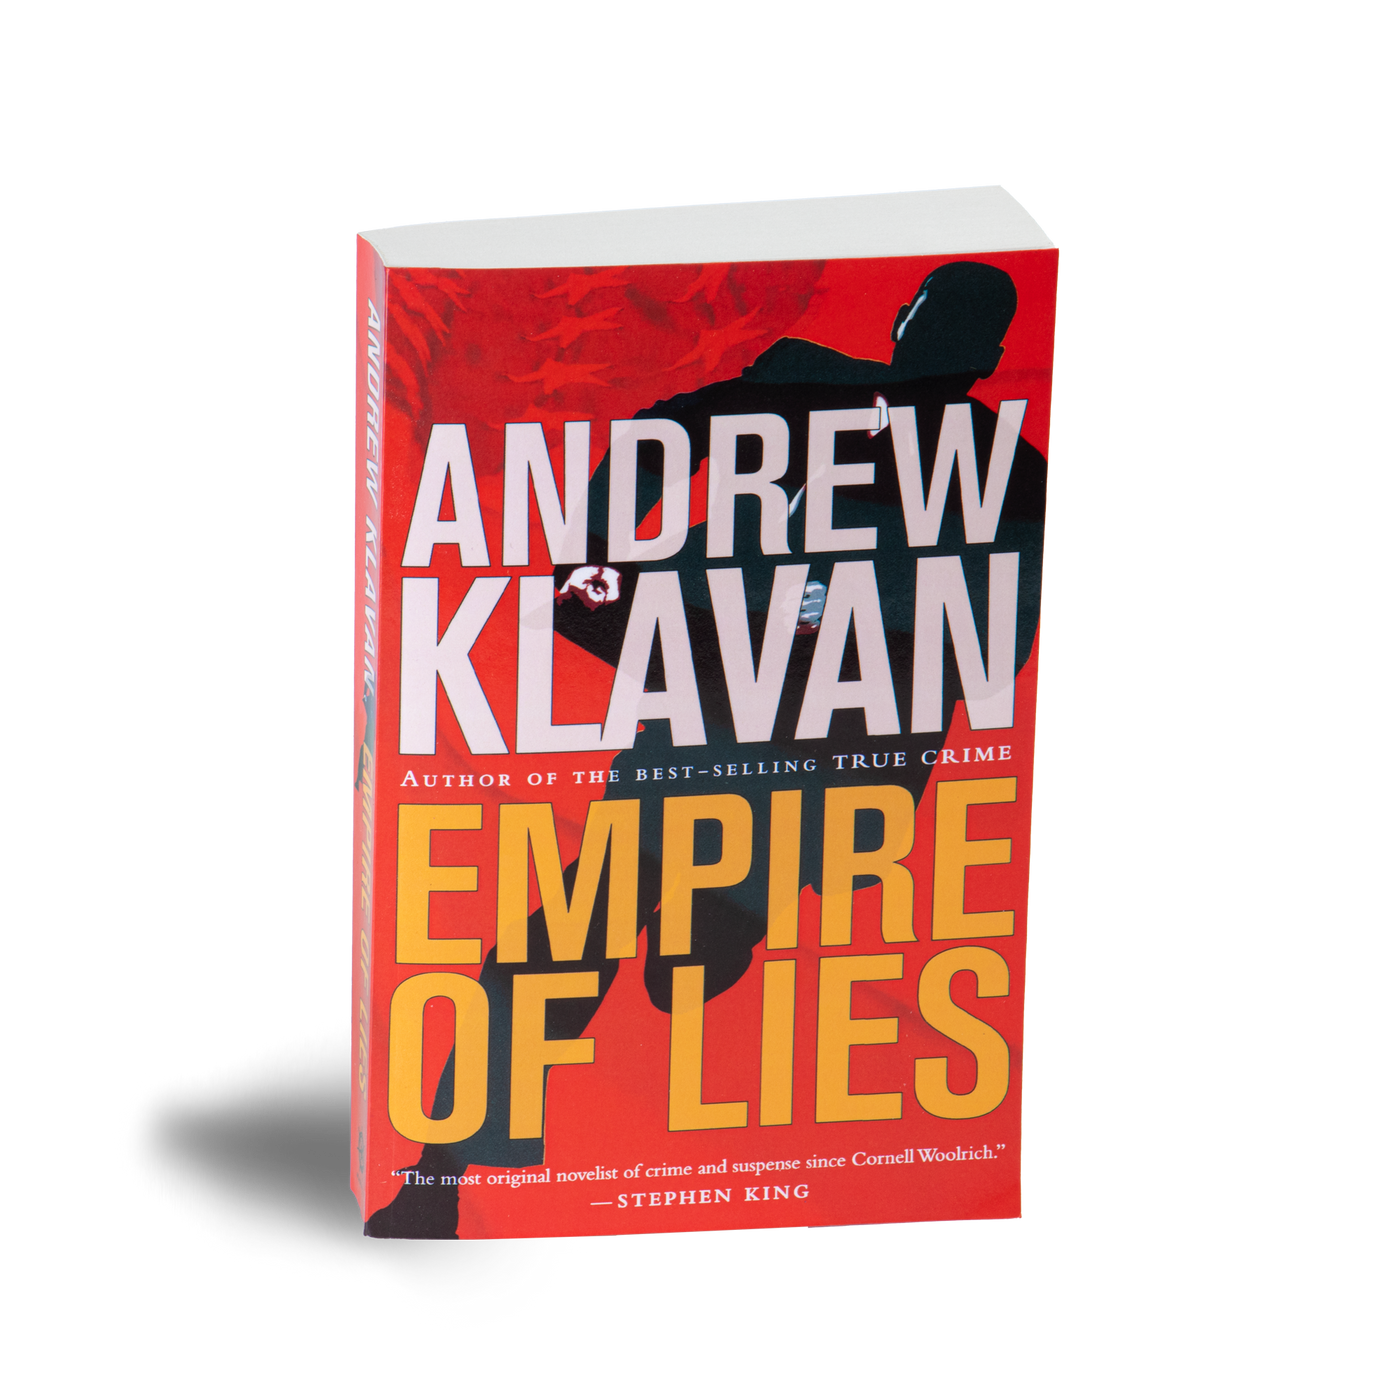 Empire of Lies by Andrew Klavan